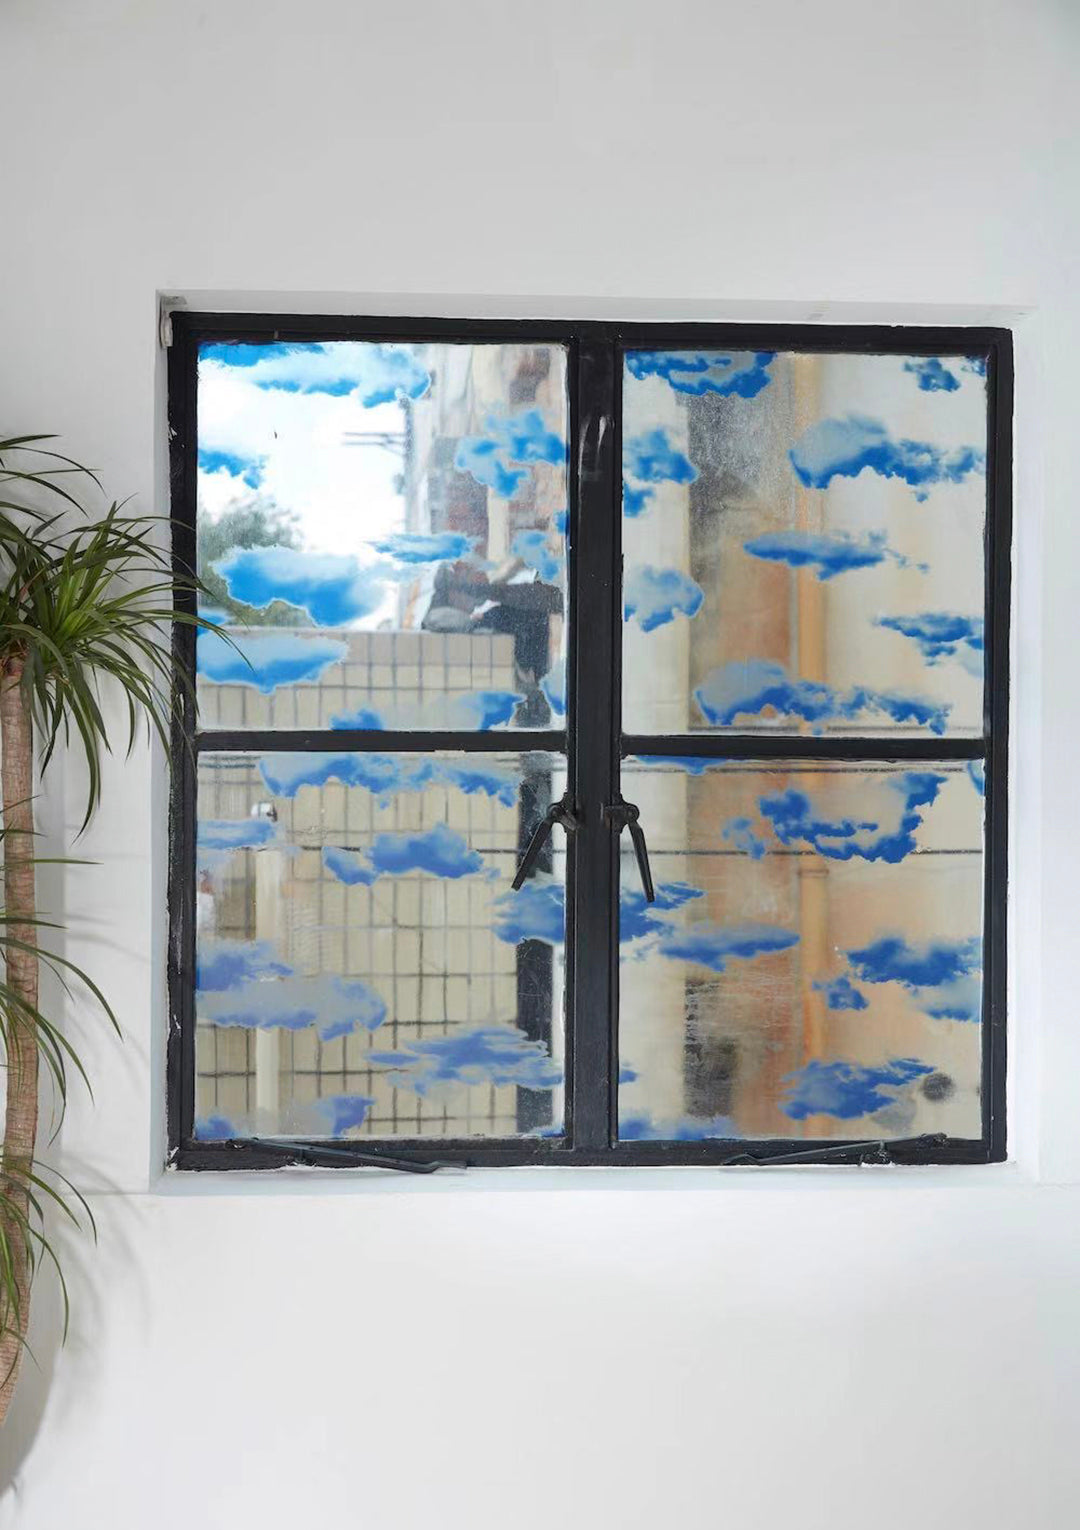 Sky-Clouds Window Film